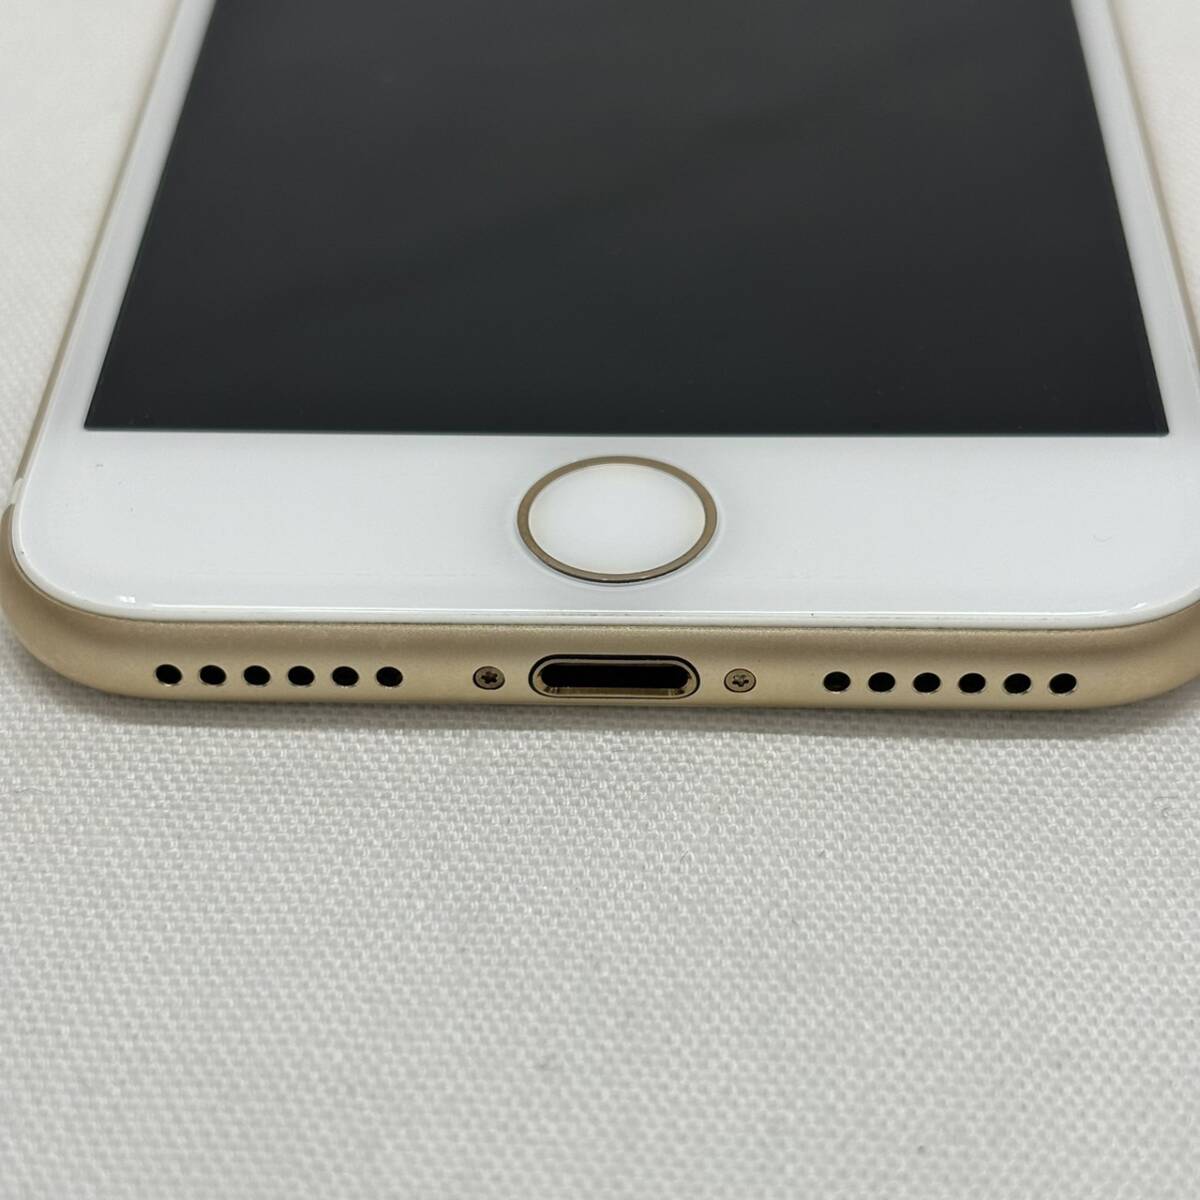 【au/Apple】訳あり iPhone7 32GB MNCG2J/A ゴールド SIMロック解除済 利用制限〇 バッテリー最大容量89% _画像3